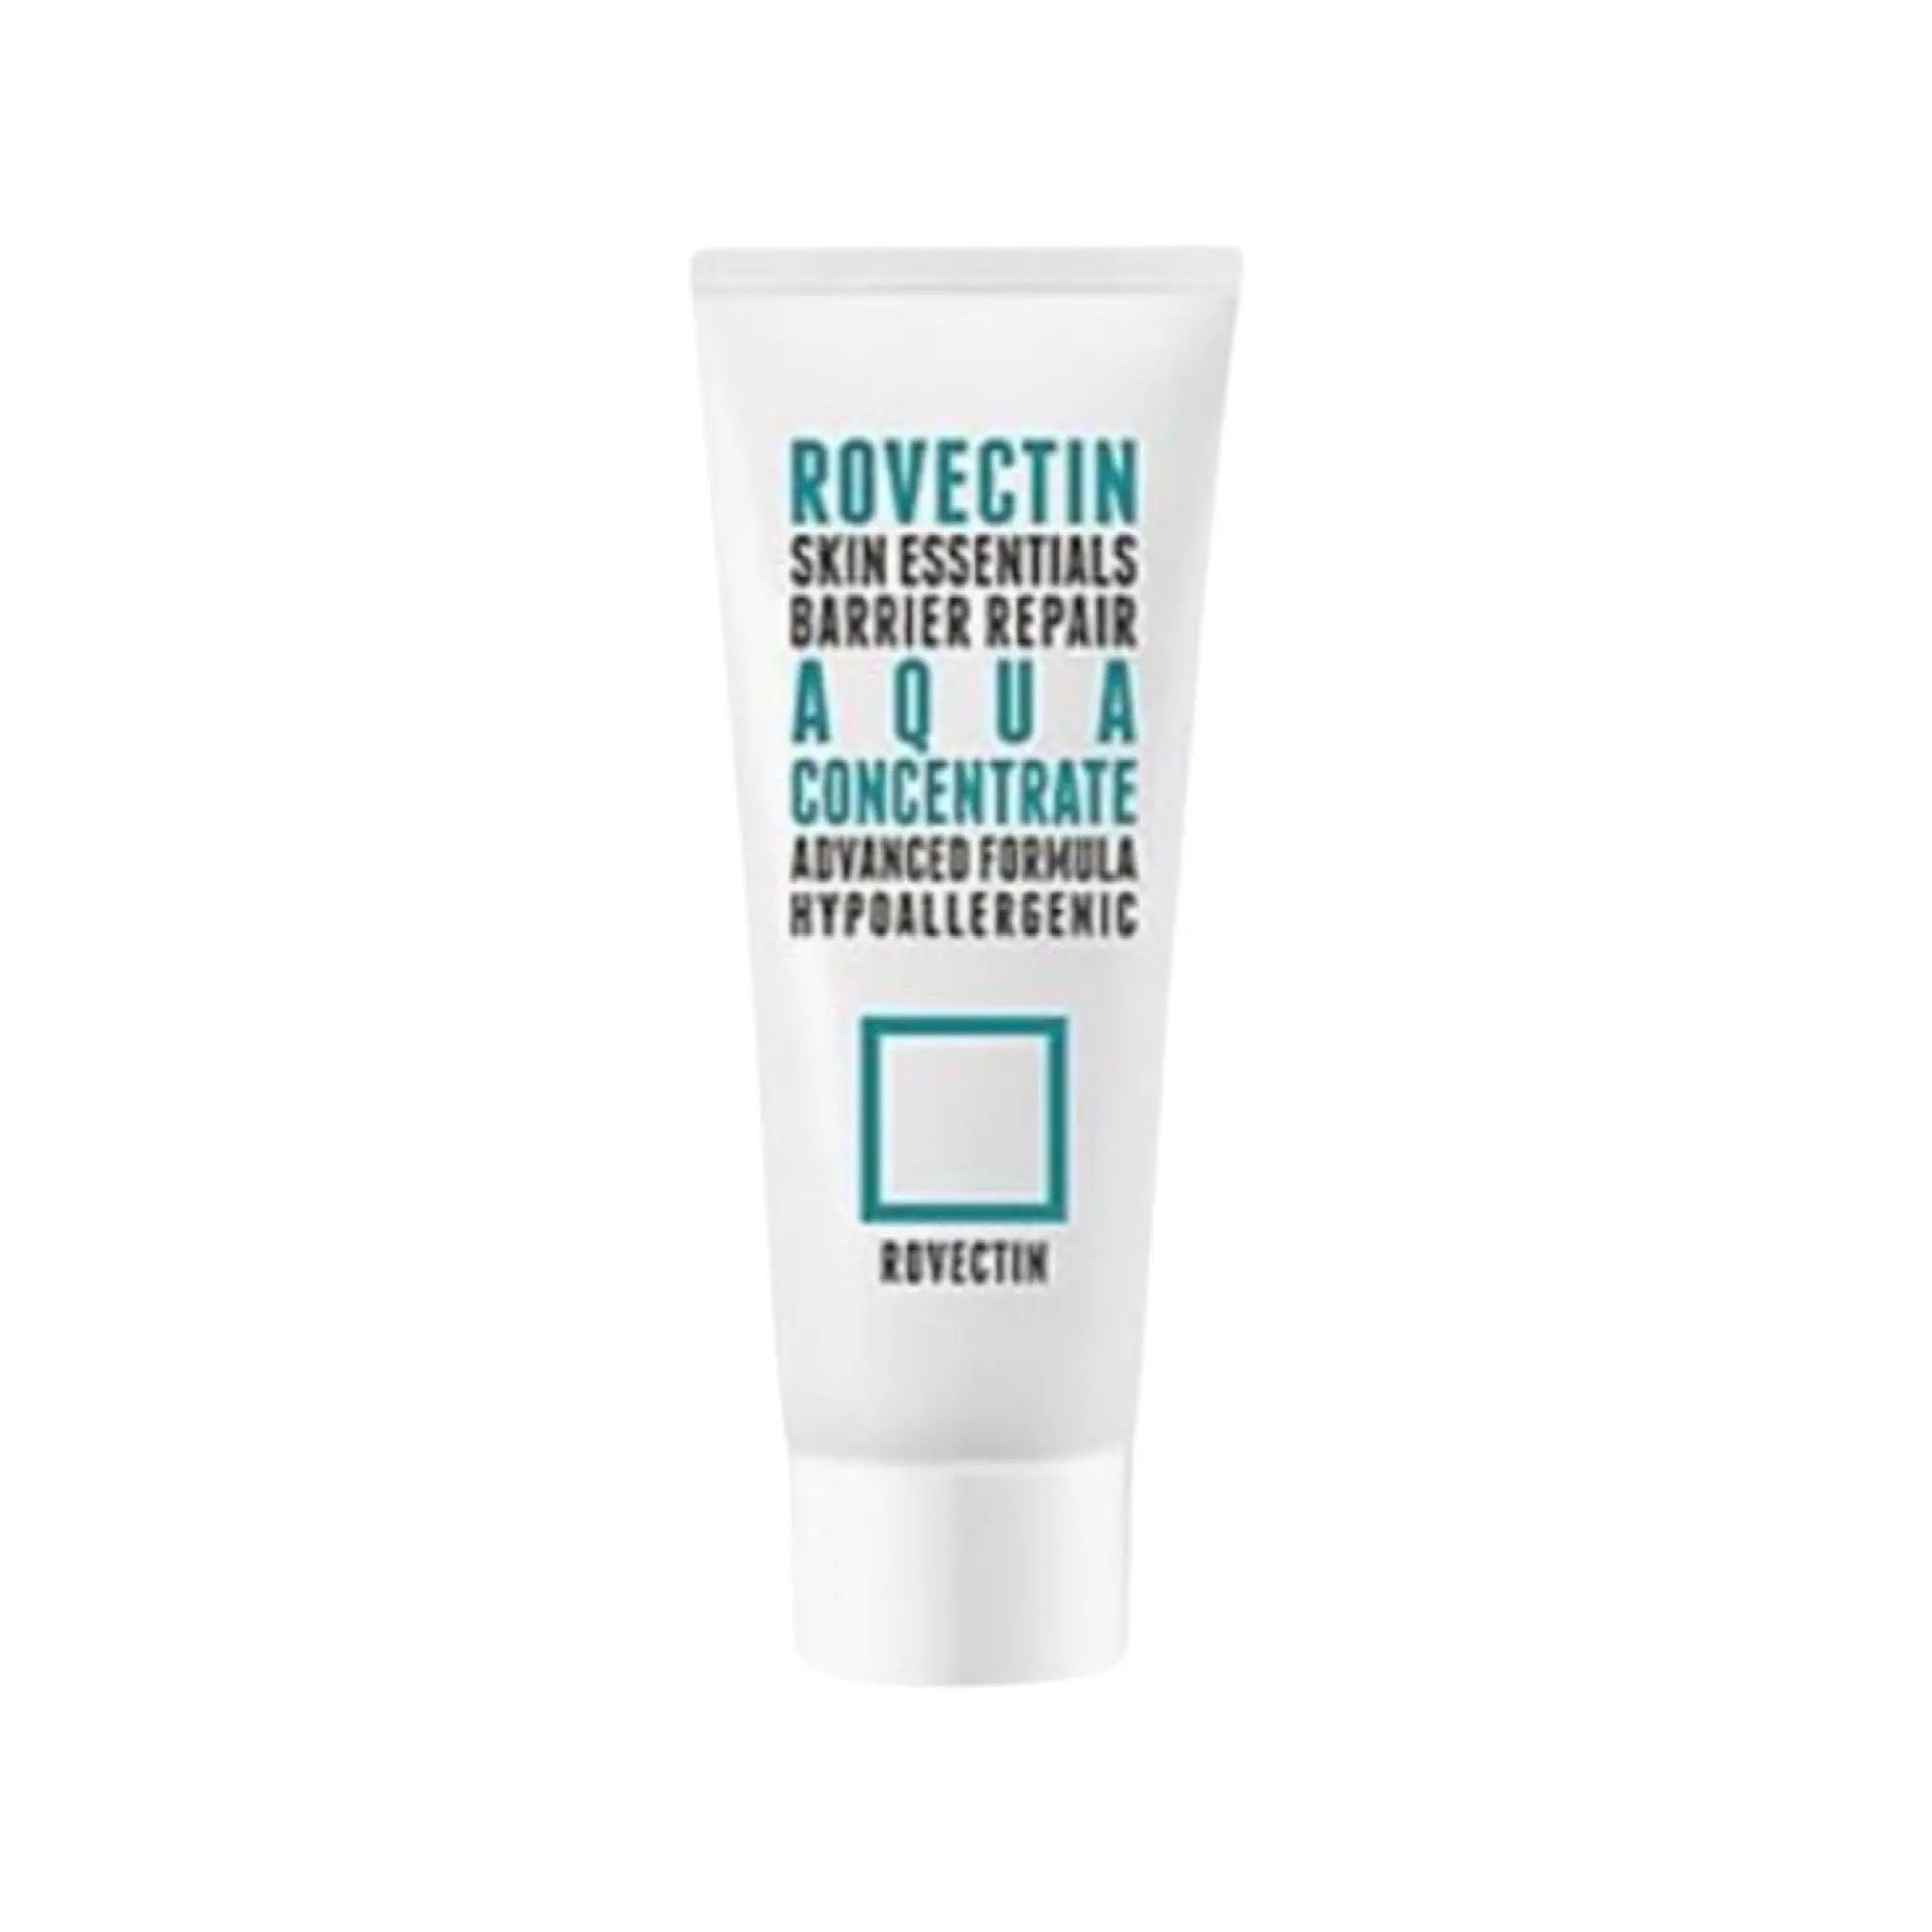 Rovectin - Skin Essentials Barrier Repair Aqua Concentrate 60mL Rovectin